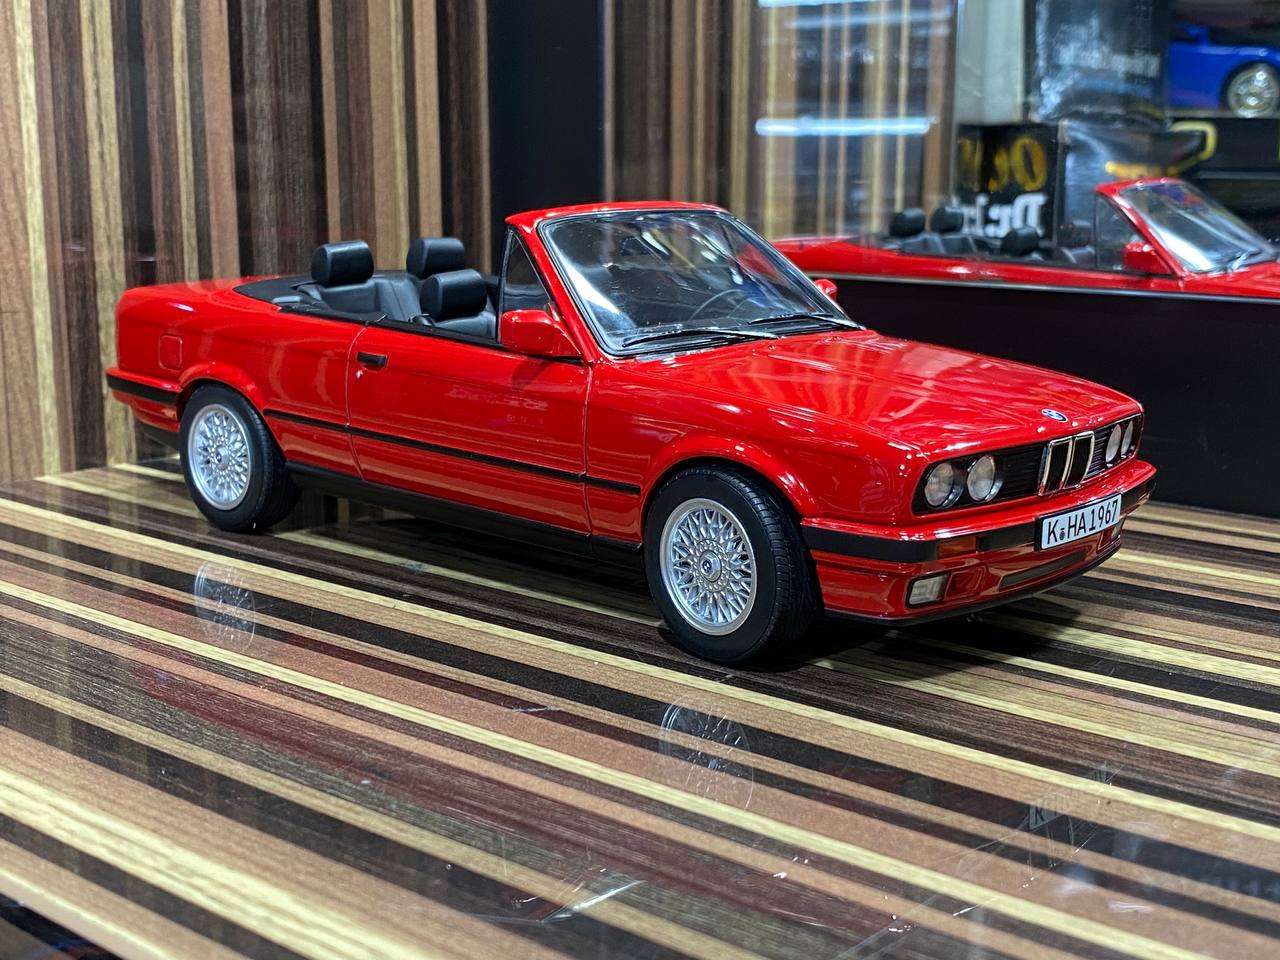 1/18 Diecast BMW 318i Cabriolet Red Norev Scale Model Car